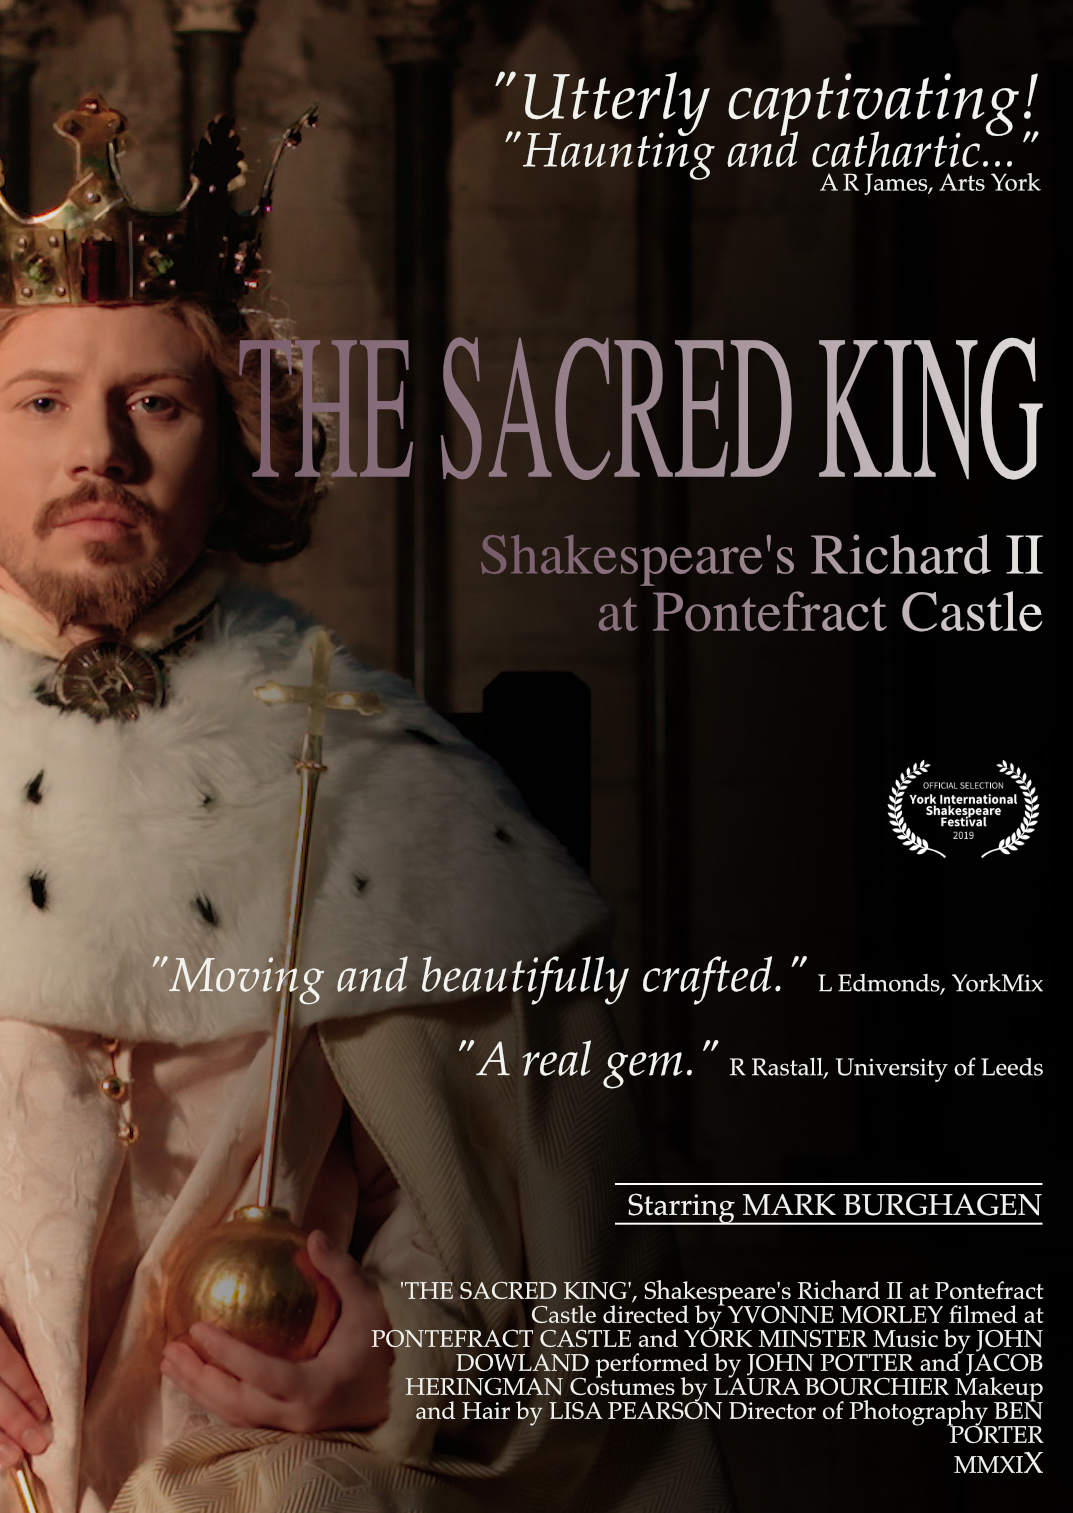 The Sacred King - Shakespeare's Richard II at Pontefract Castle